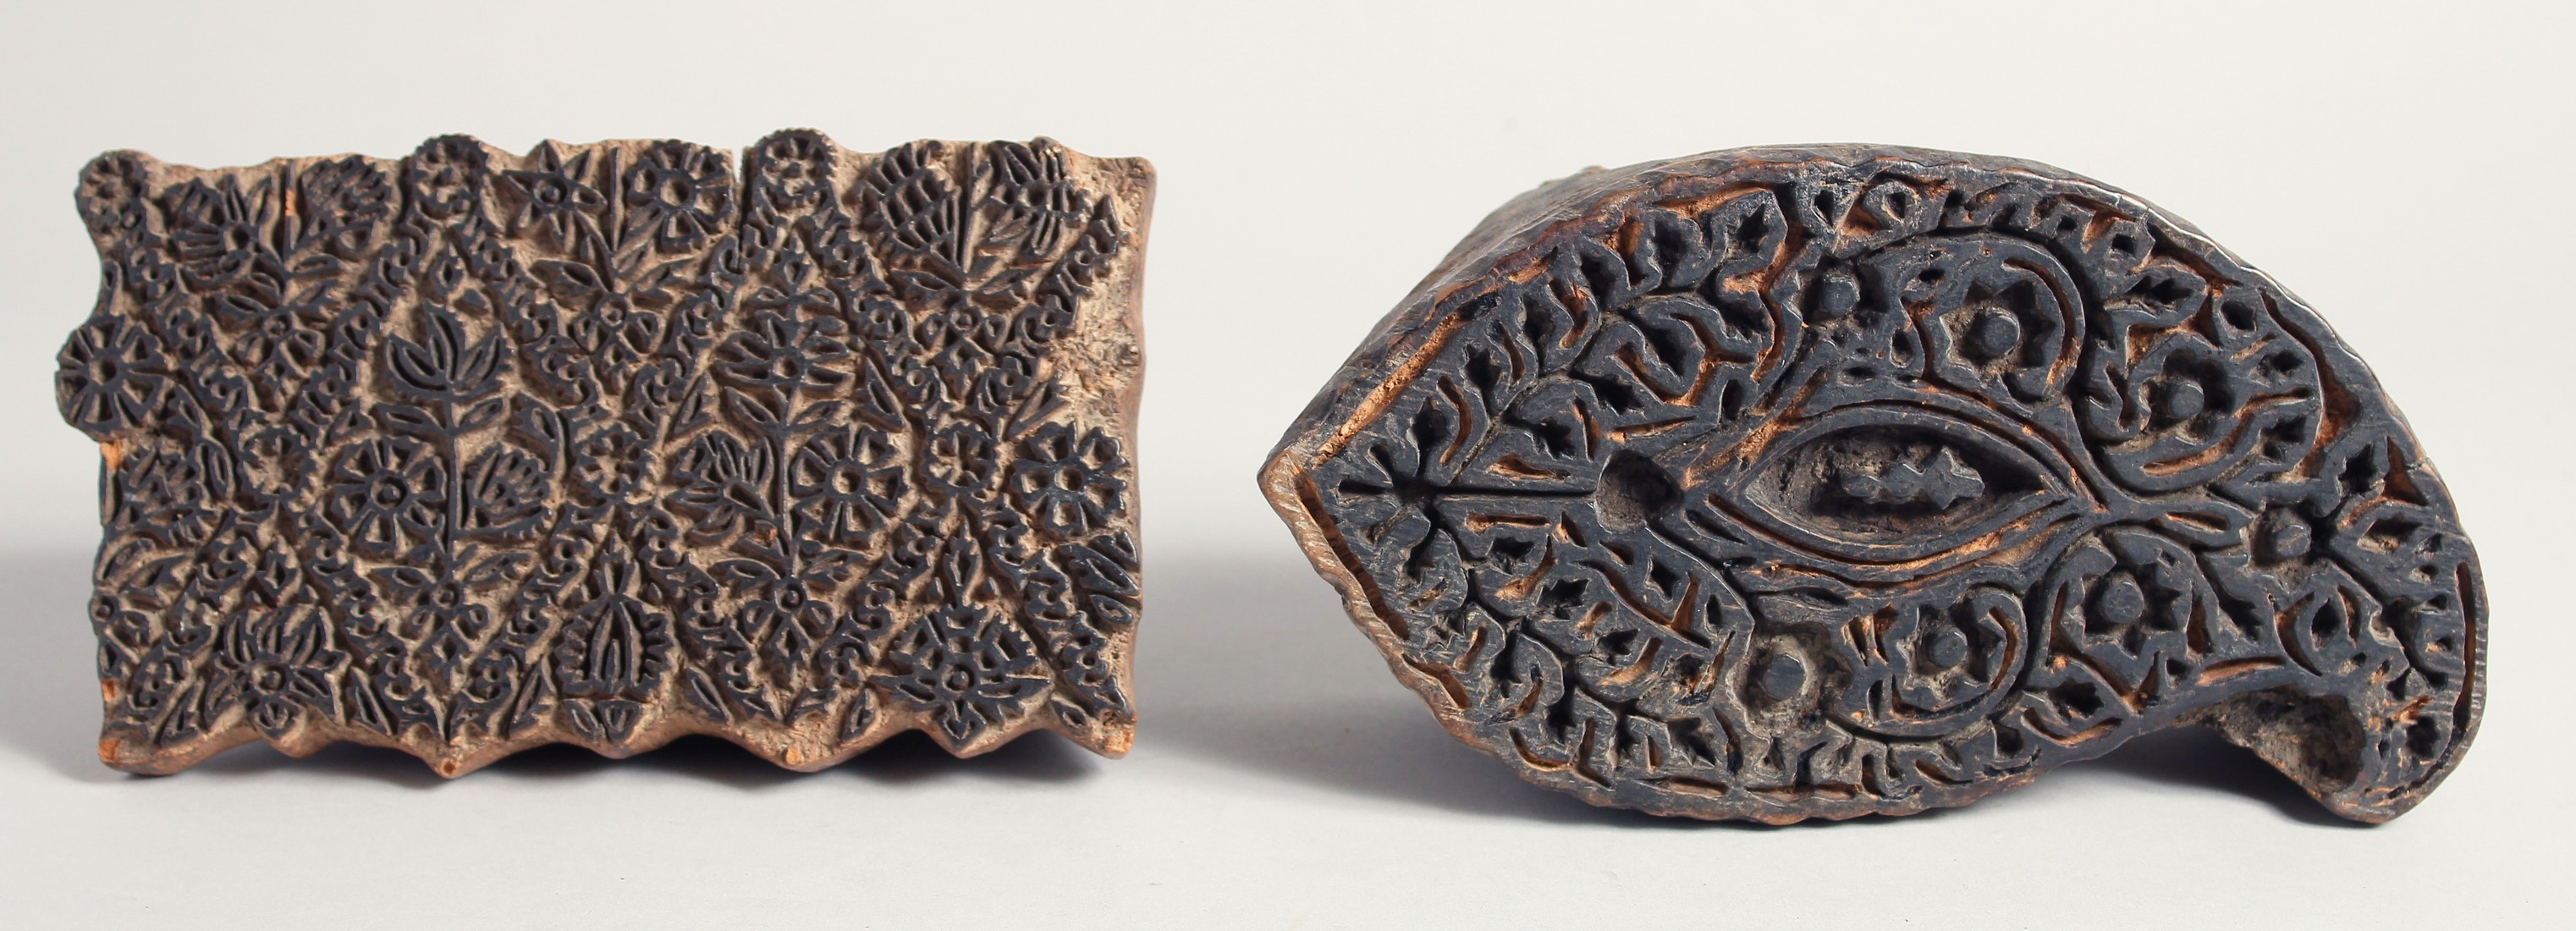 TWO 19TH CENTURY INDO-PERSIAN KALAMKARI WOODEN PRINTING BLOCKS, carved with foliate design, 18cm x